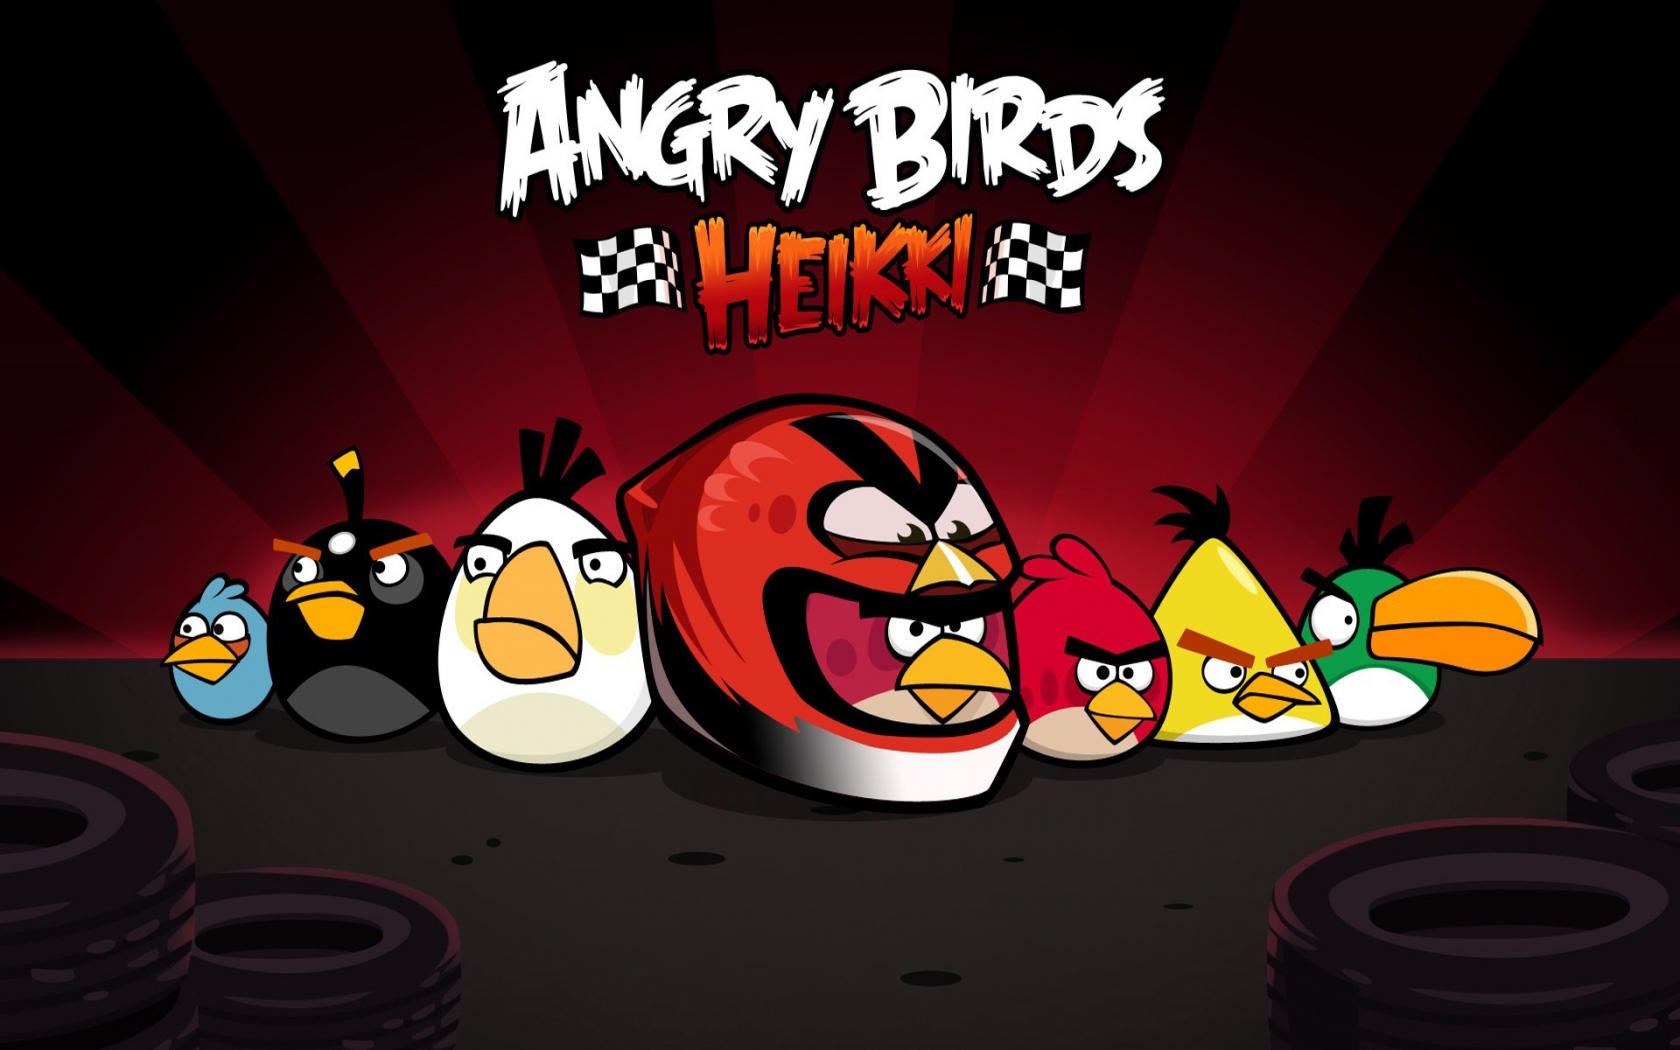 Angry Birds Heikki for 1680 x 1050 widescreen resolution